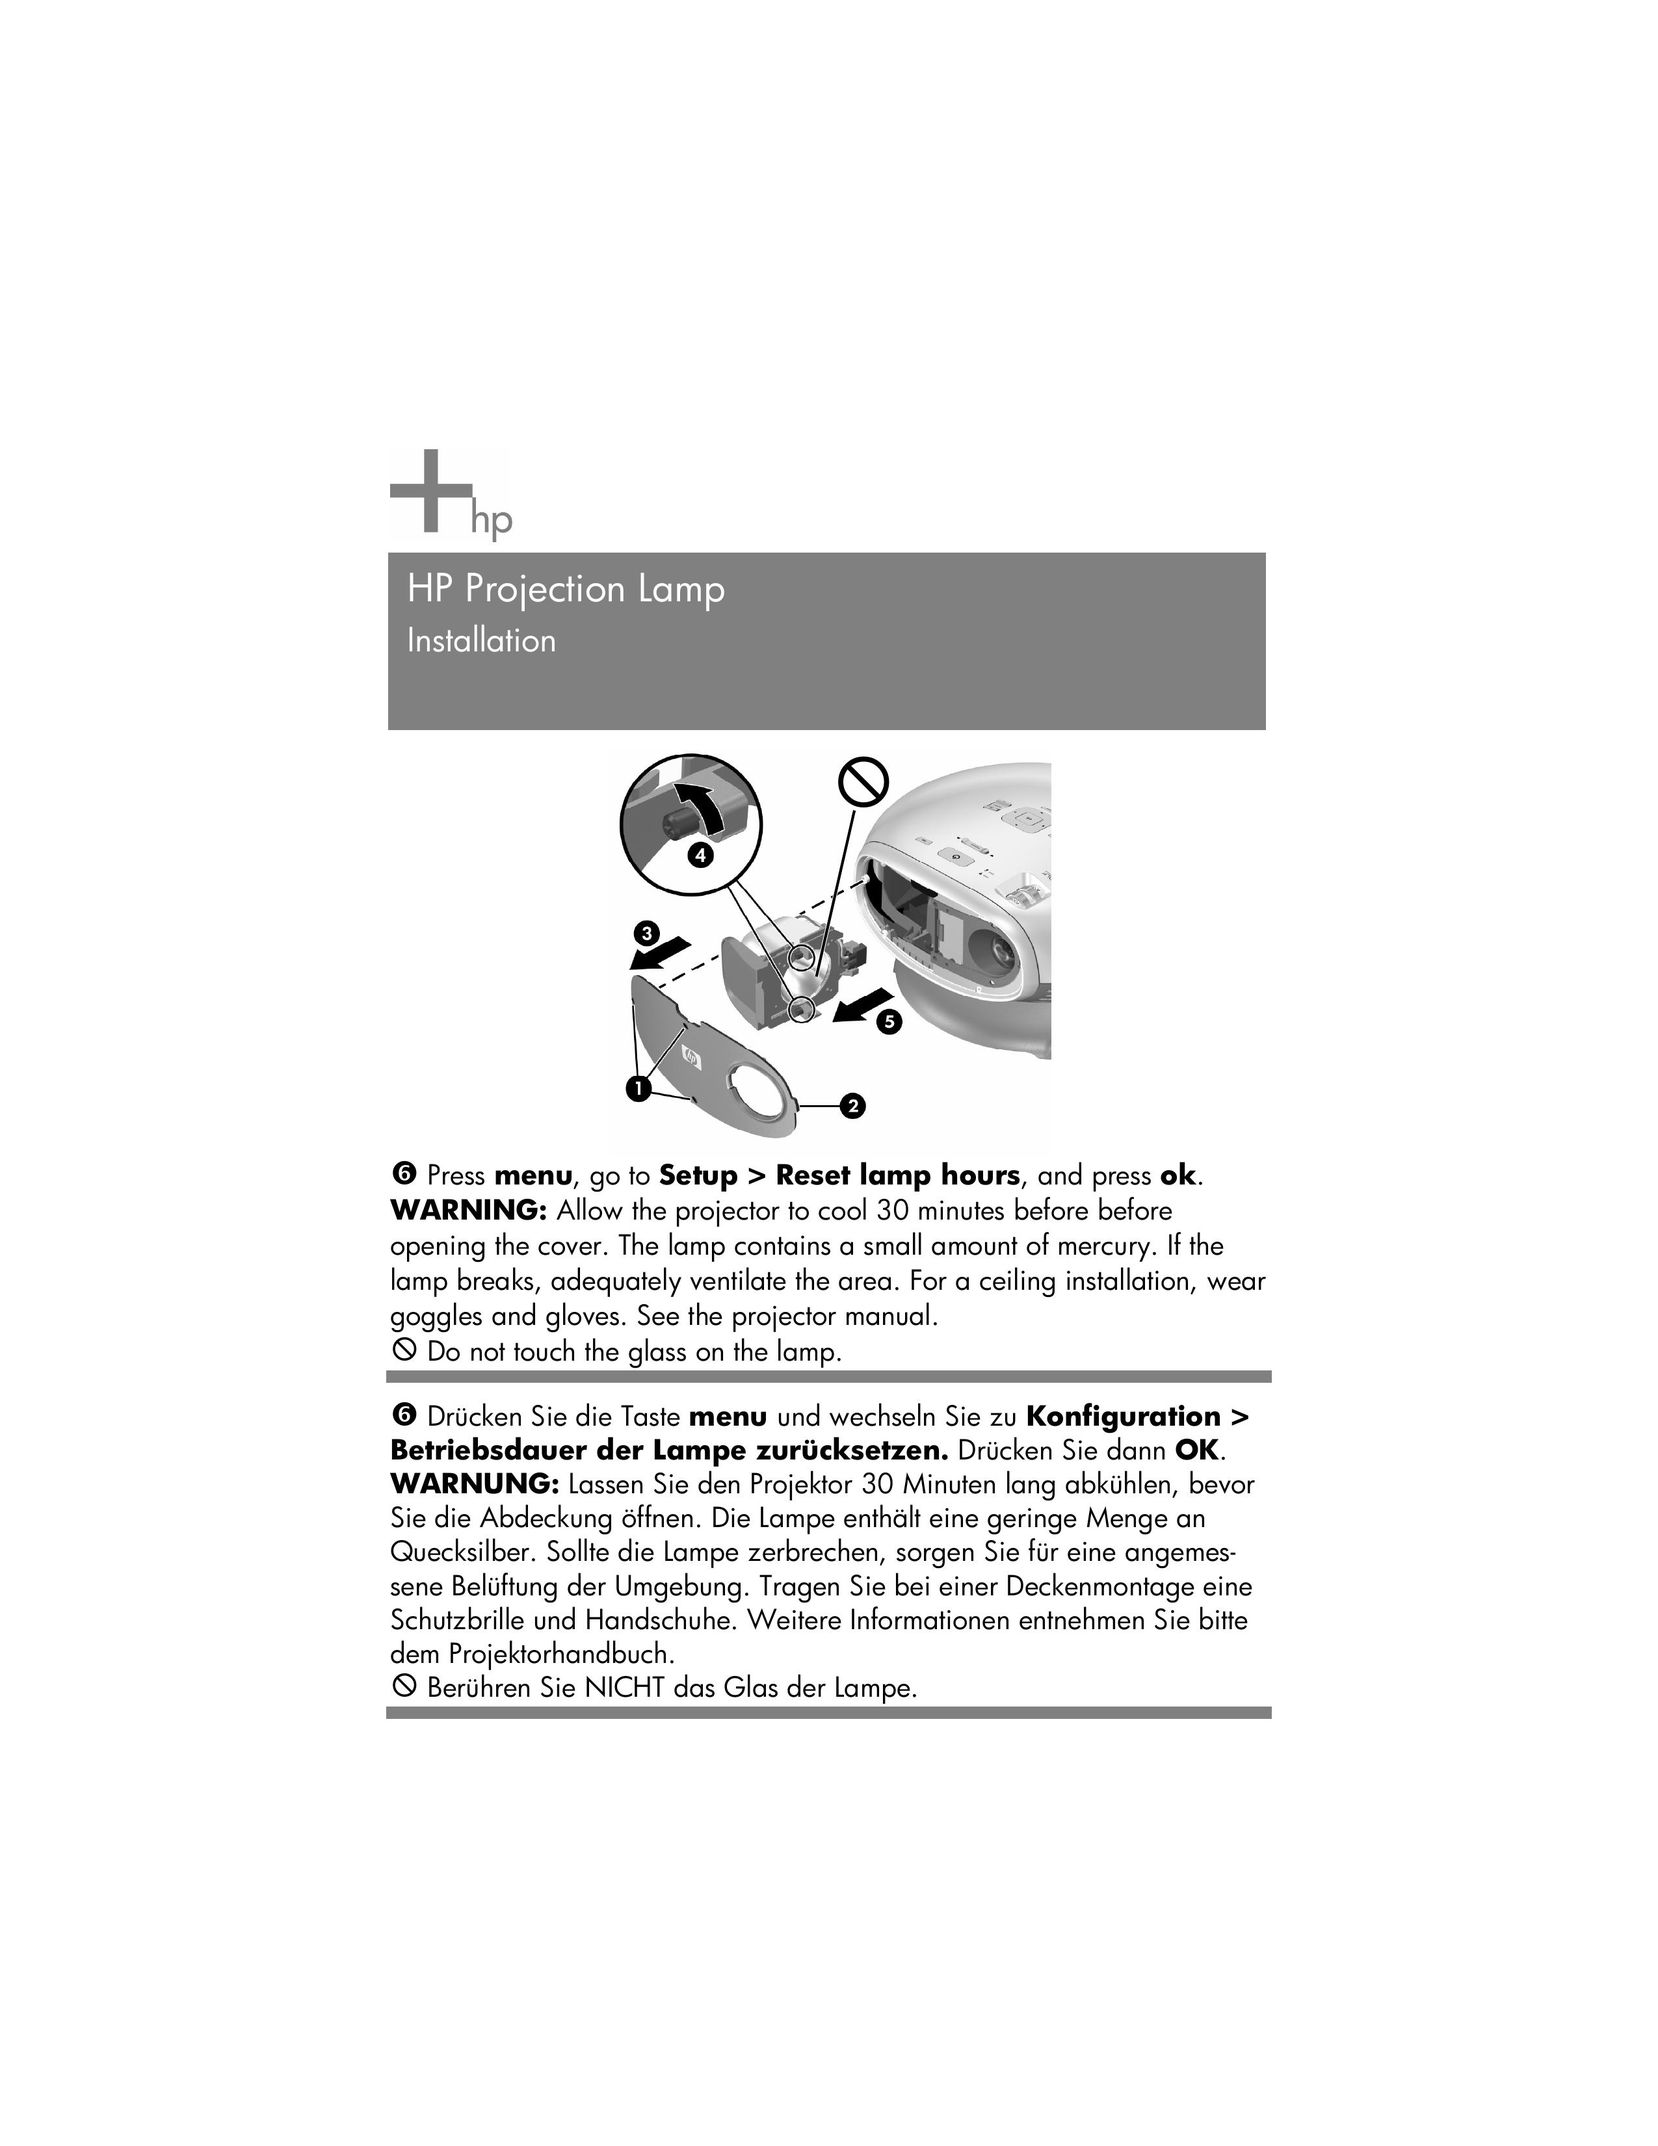 HP (Hewlett-Packard) EP3 Projector Accessories User Manual